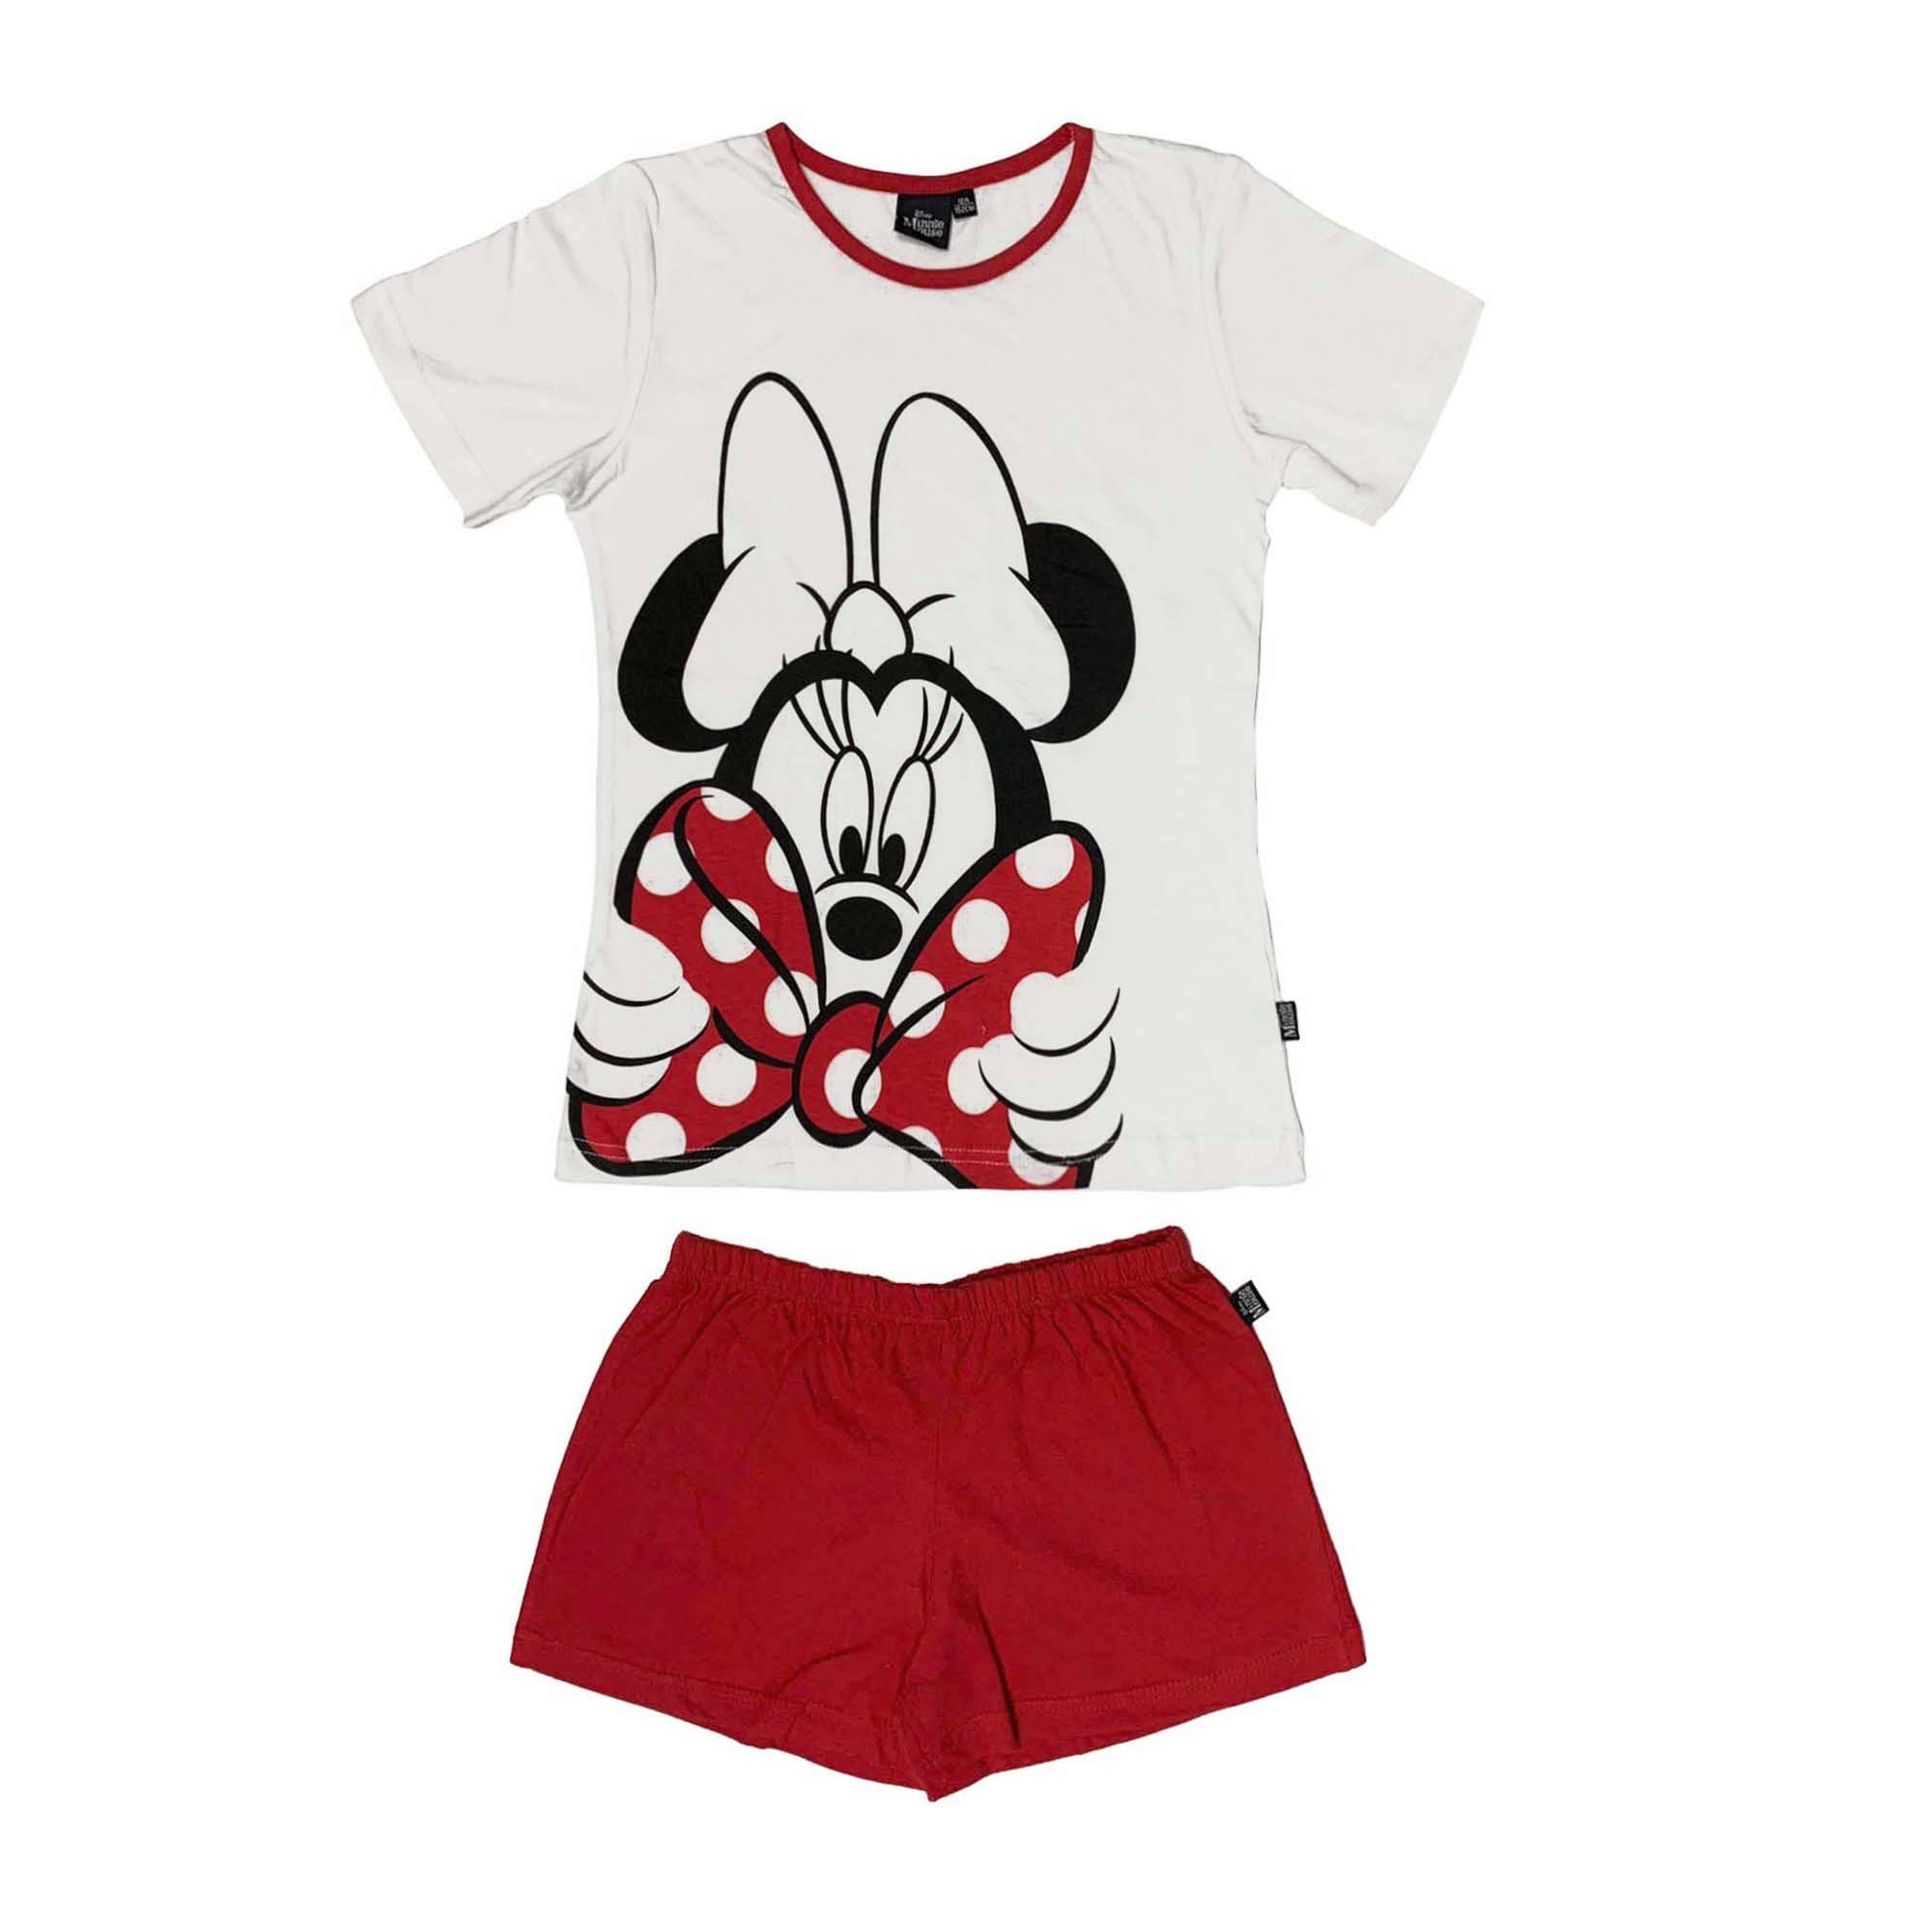 Pigiama corto bambina Disney Minnie Mouse completo t-shirt e shorts cotone 3986